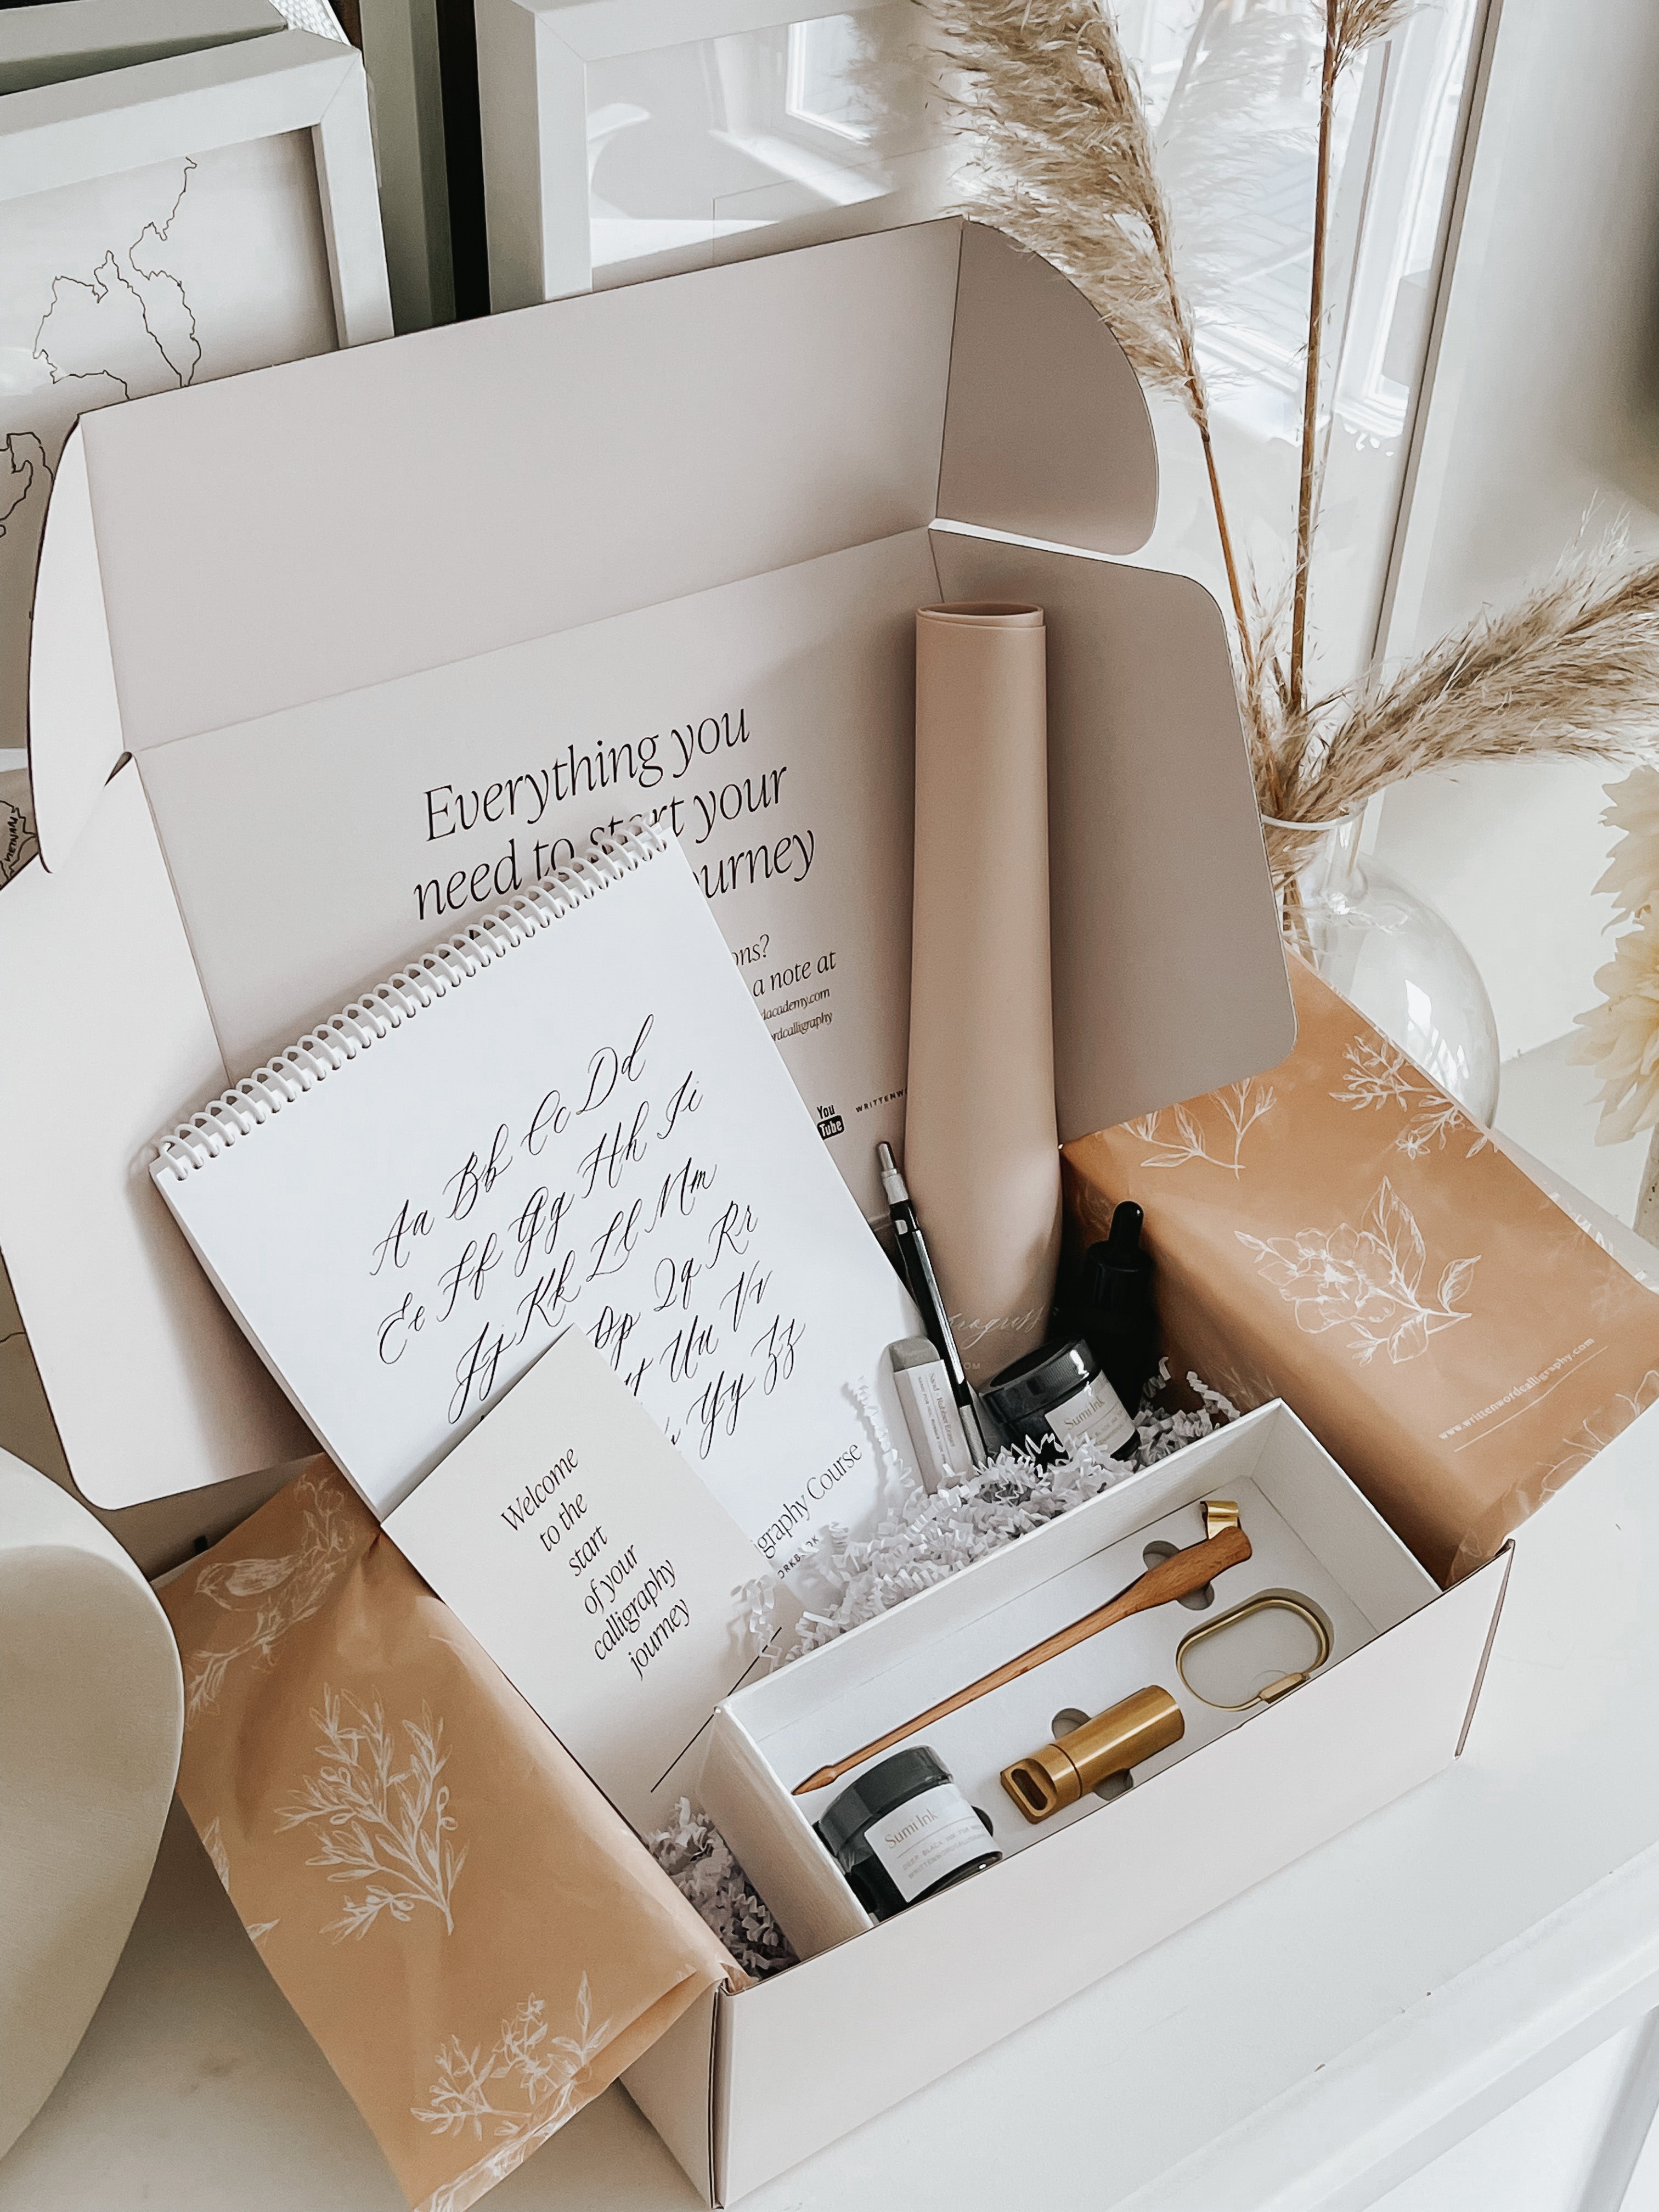 Luxury Beginners Calligraphy Kit — Kate Illustrate